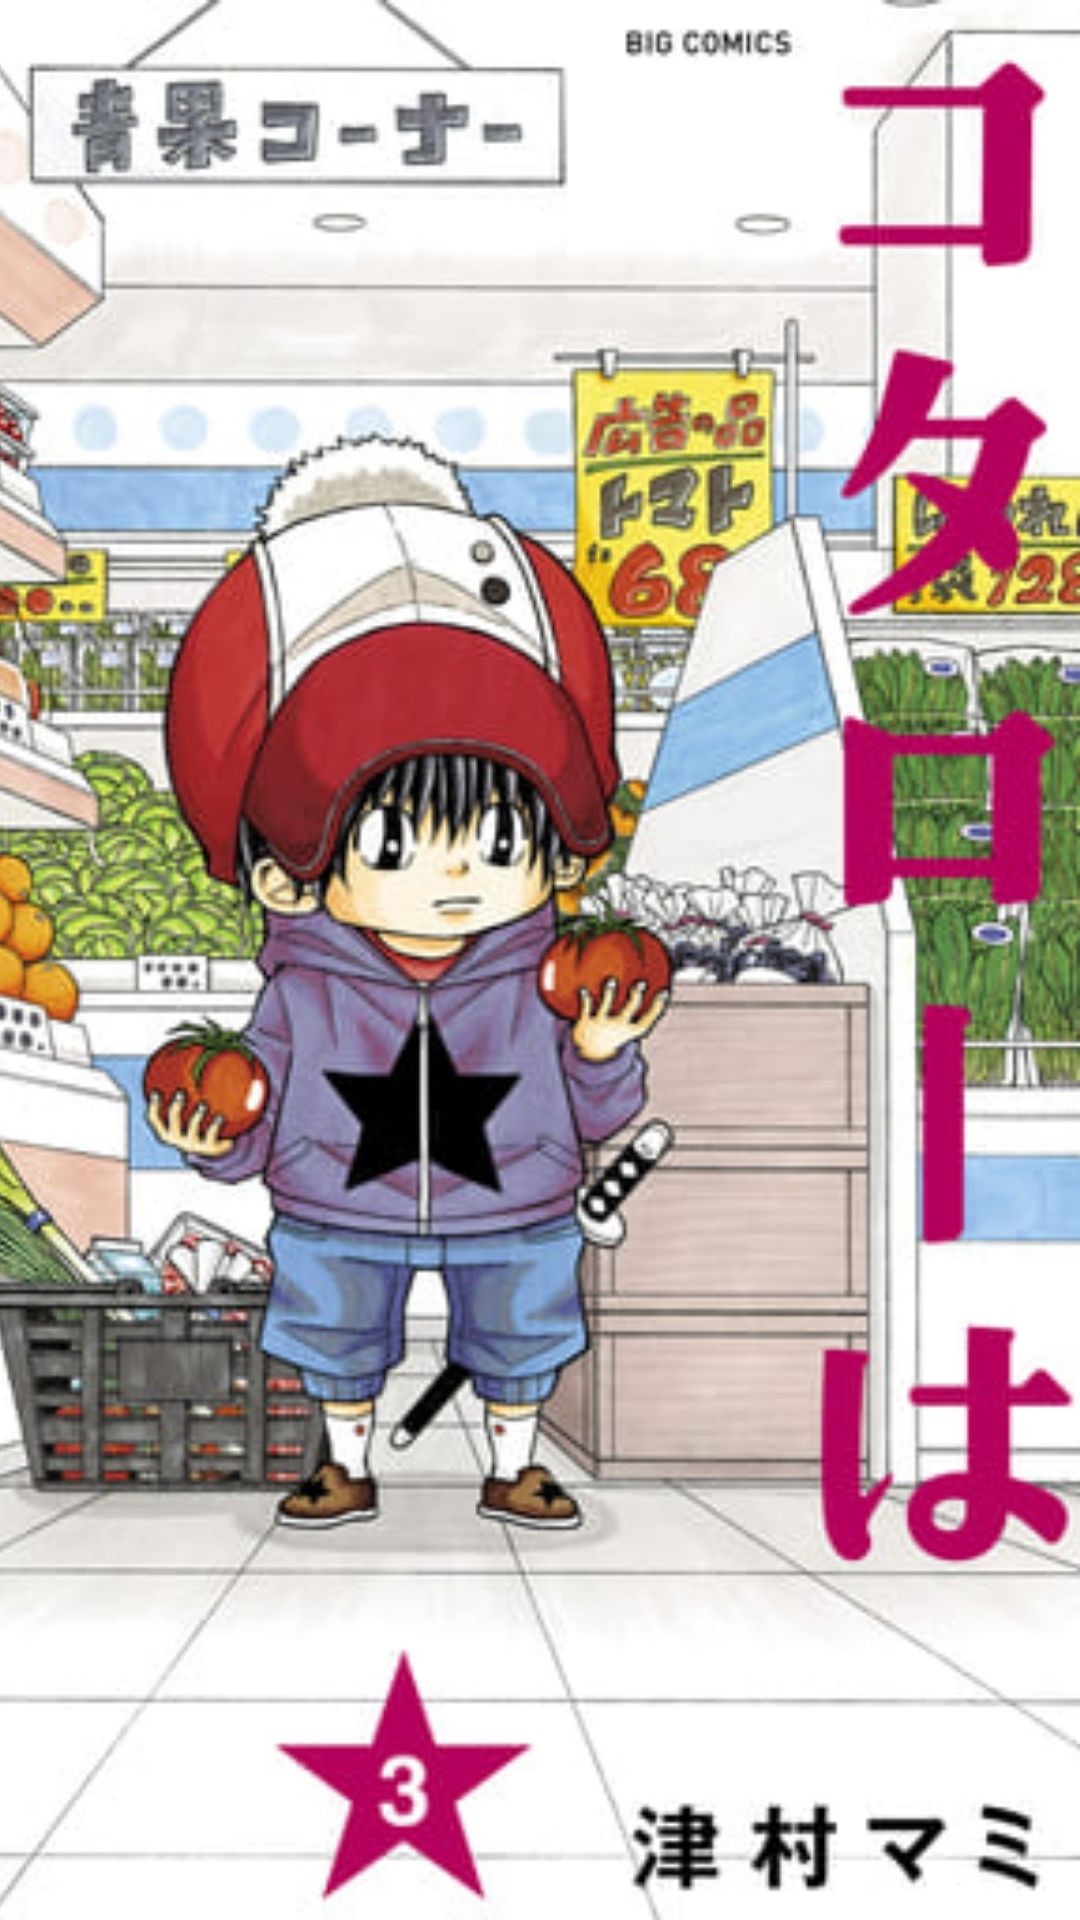 Kotaro lives alone manga